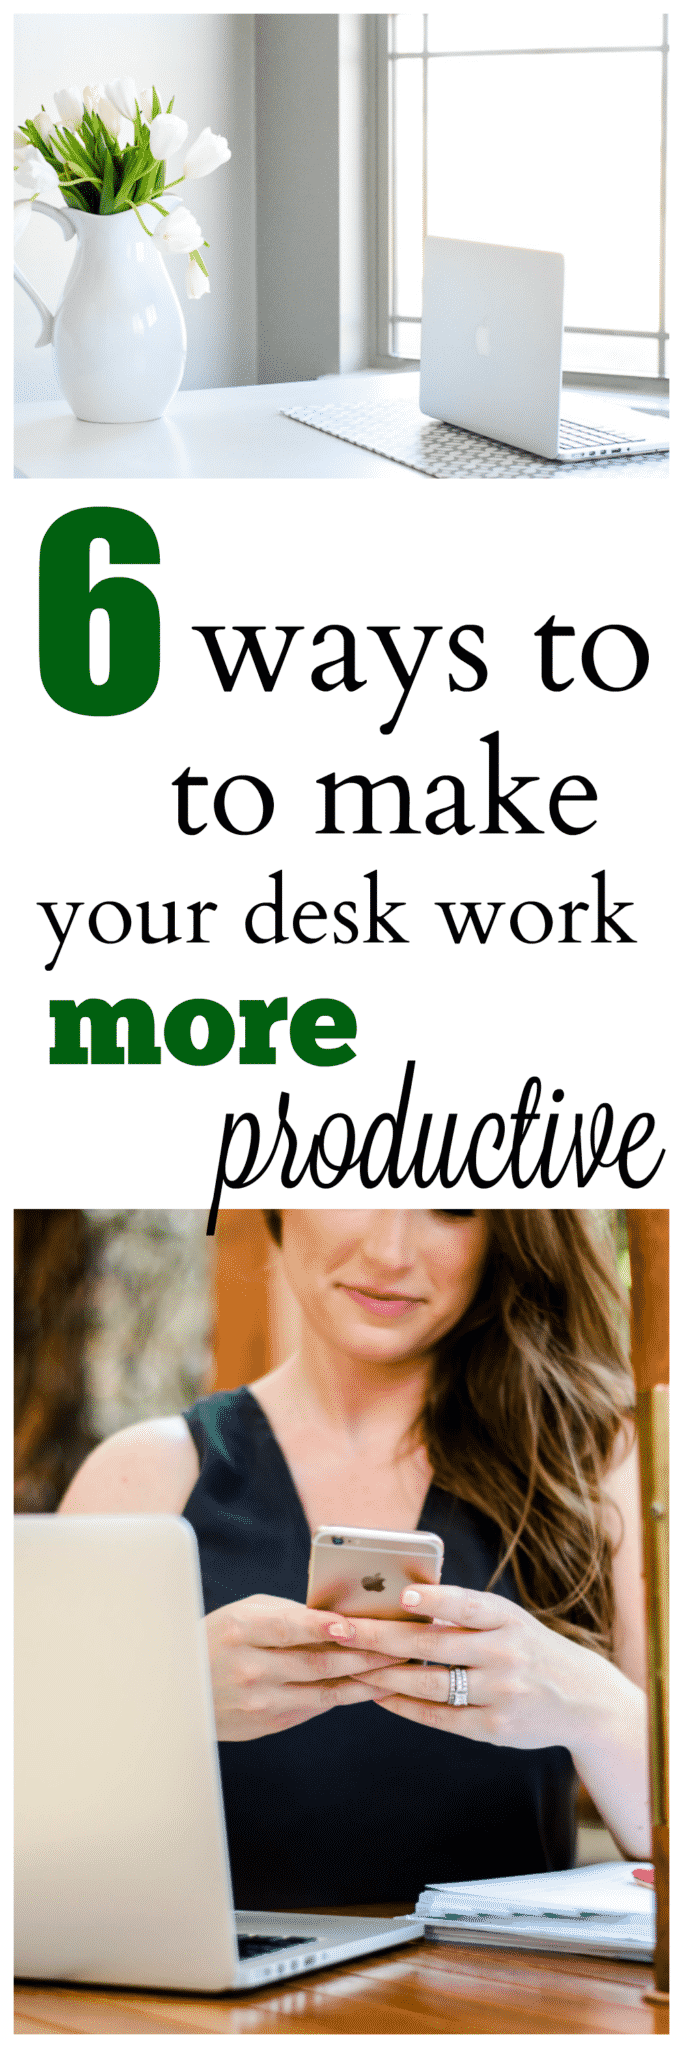 Desk work productivity tips